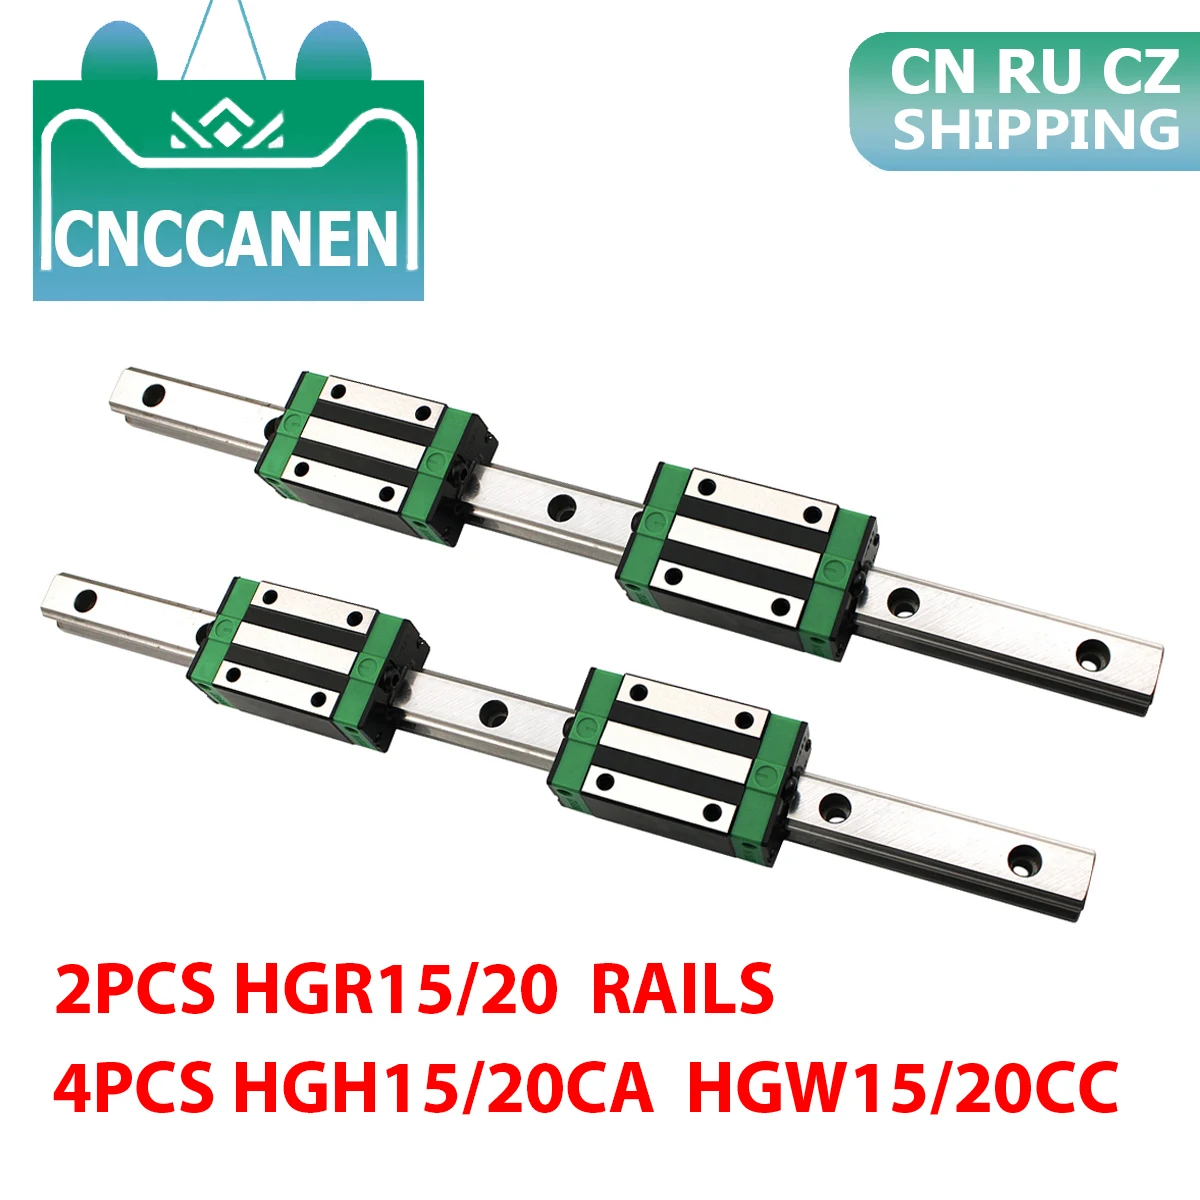 2PCS HGR15 HGR20 Square Linear Guide Rail + 4PCS HGH15CA HGH20CA / HGW15CC HGW20CC Slide Block Carriage for CNC Router Engraving |